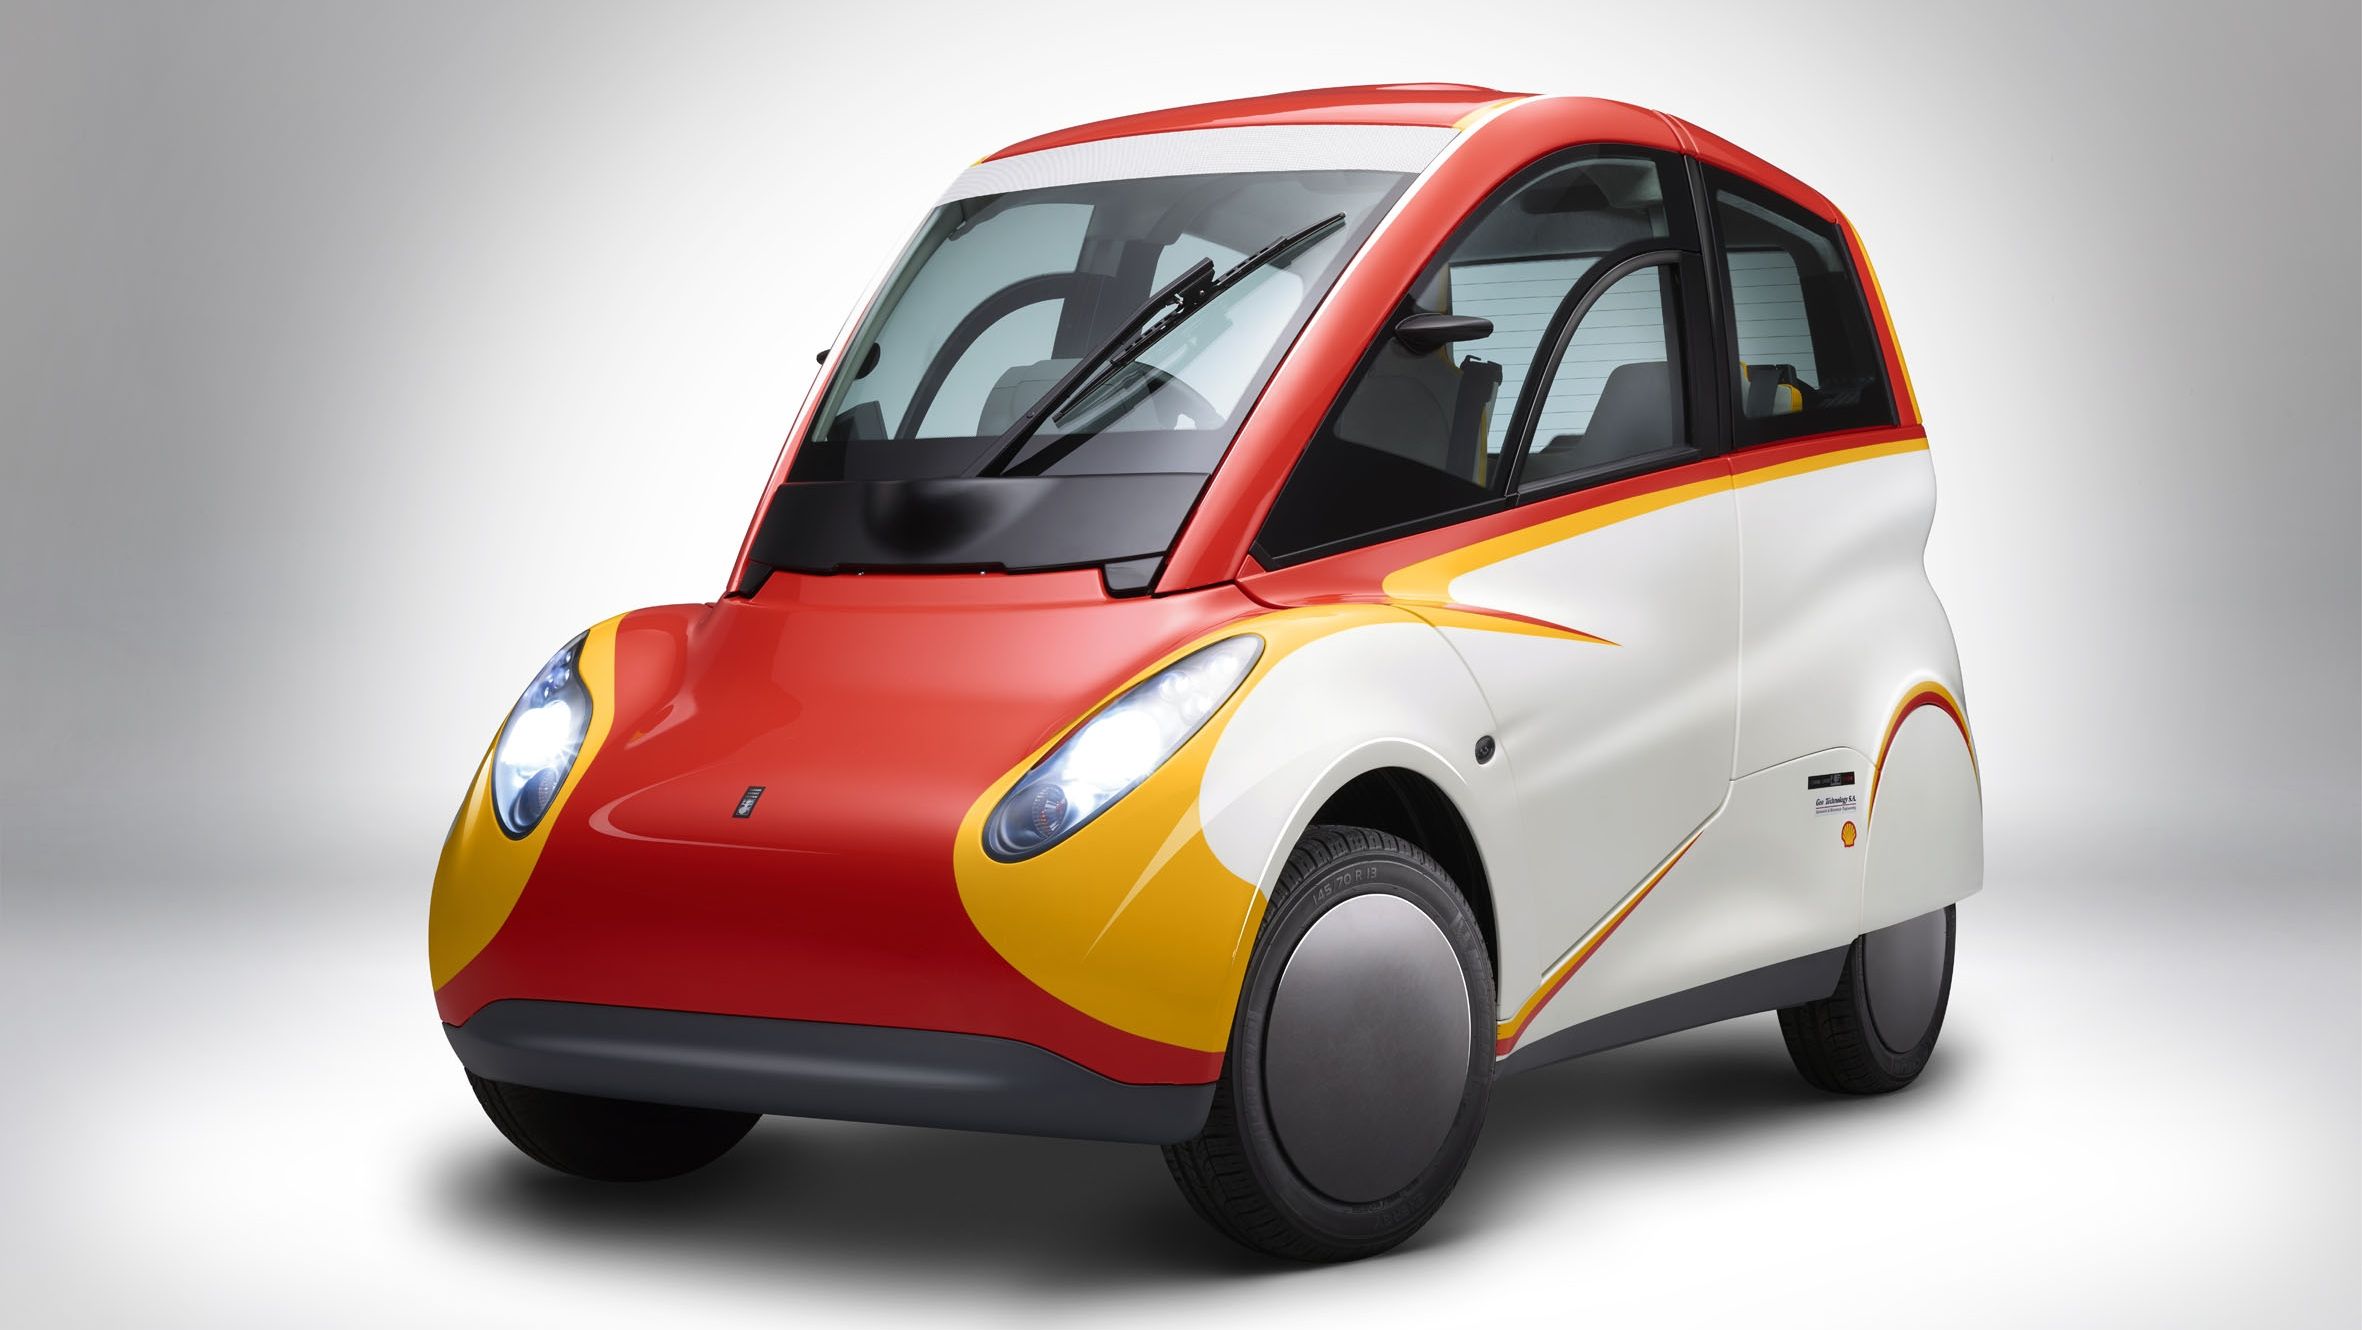 2016 Shell Concept Car